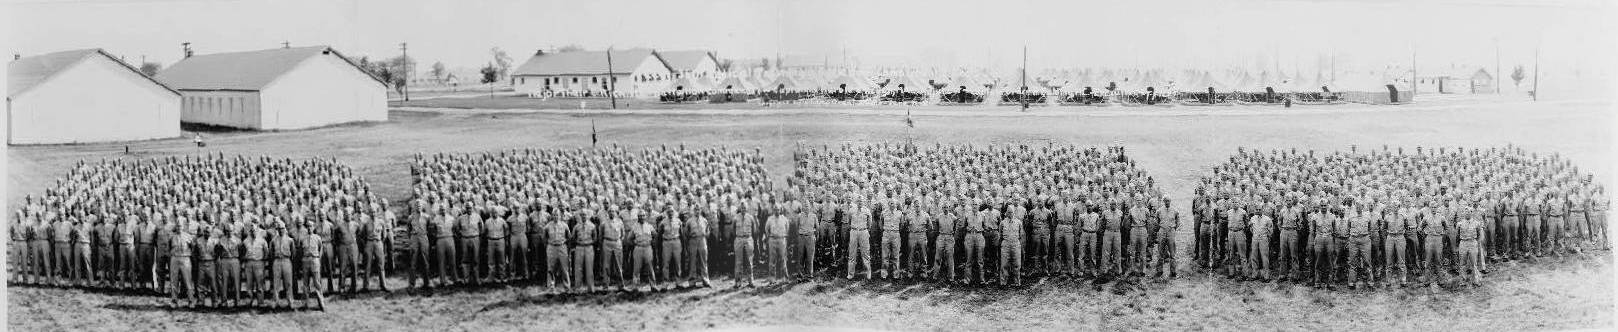 1941 - Camp Grant Officer Cadre